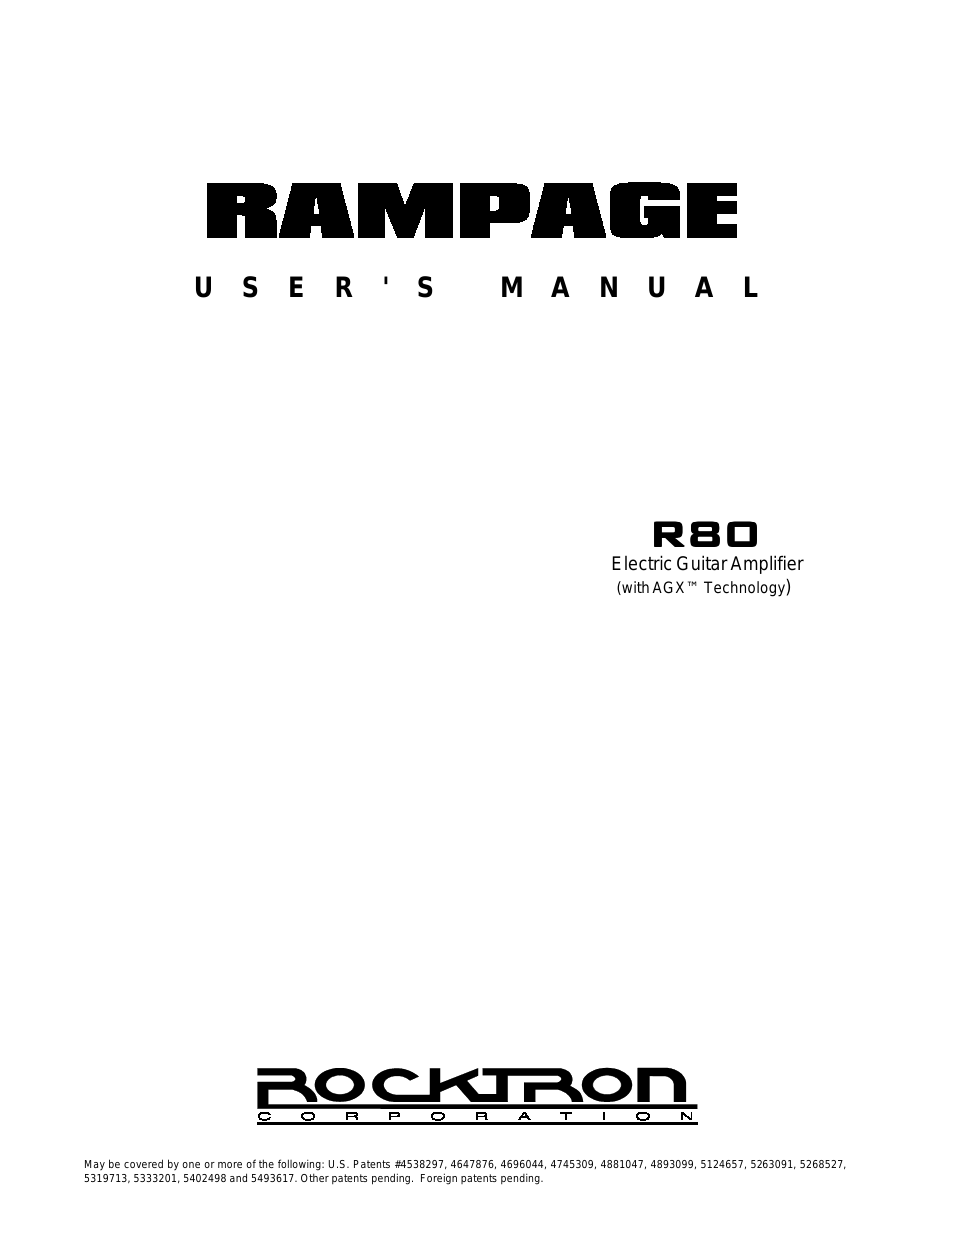 Rampage R80